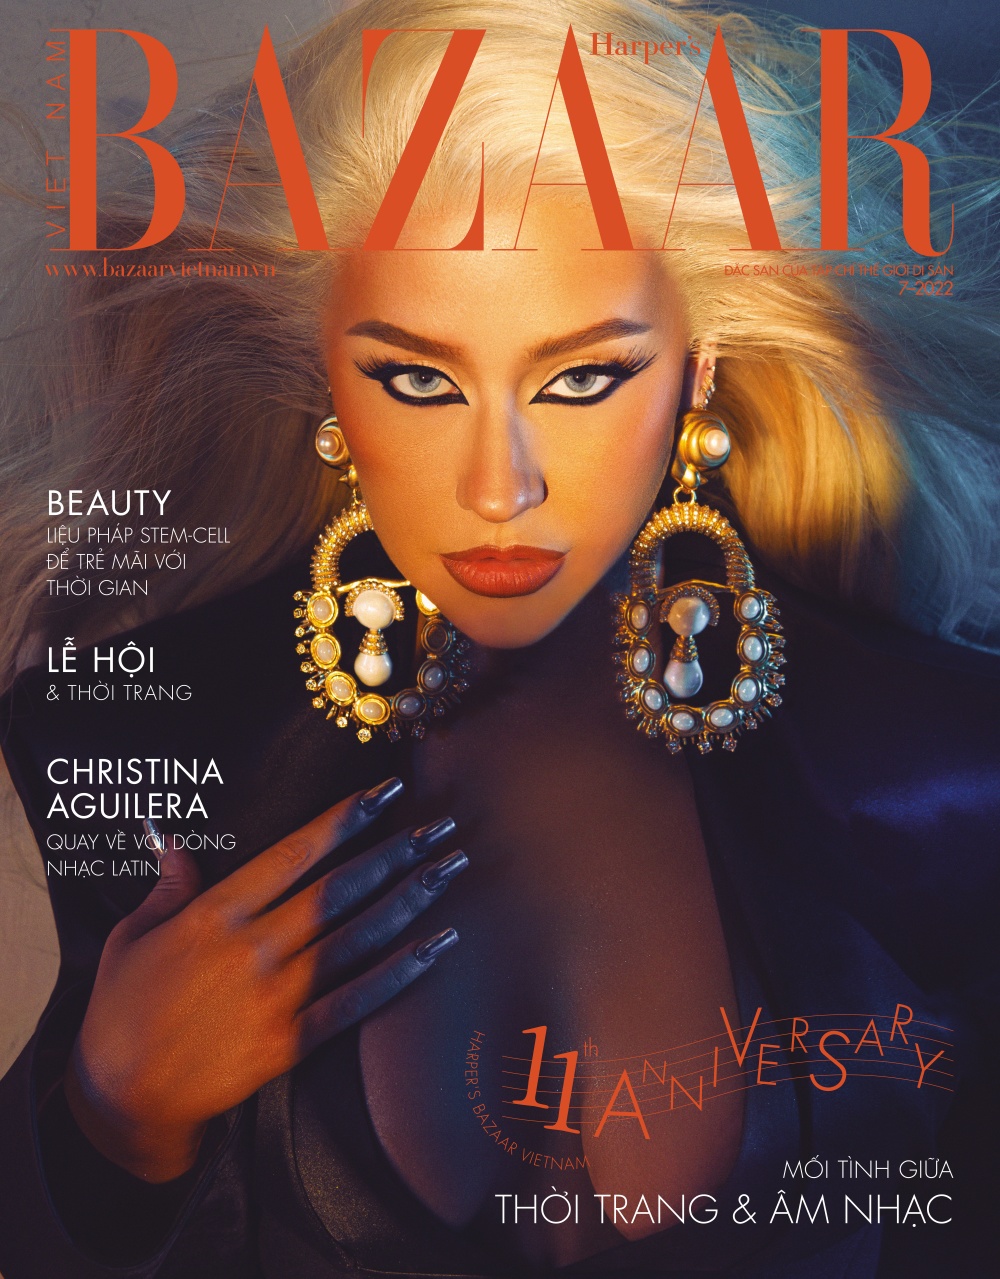 Christina Aguilera trên trang bìa Harper's Bazaar 7/22.